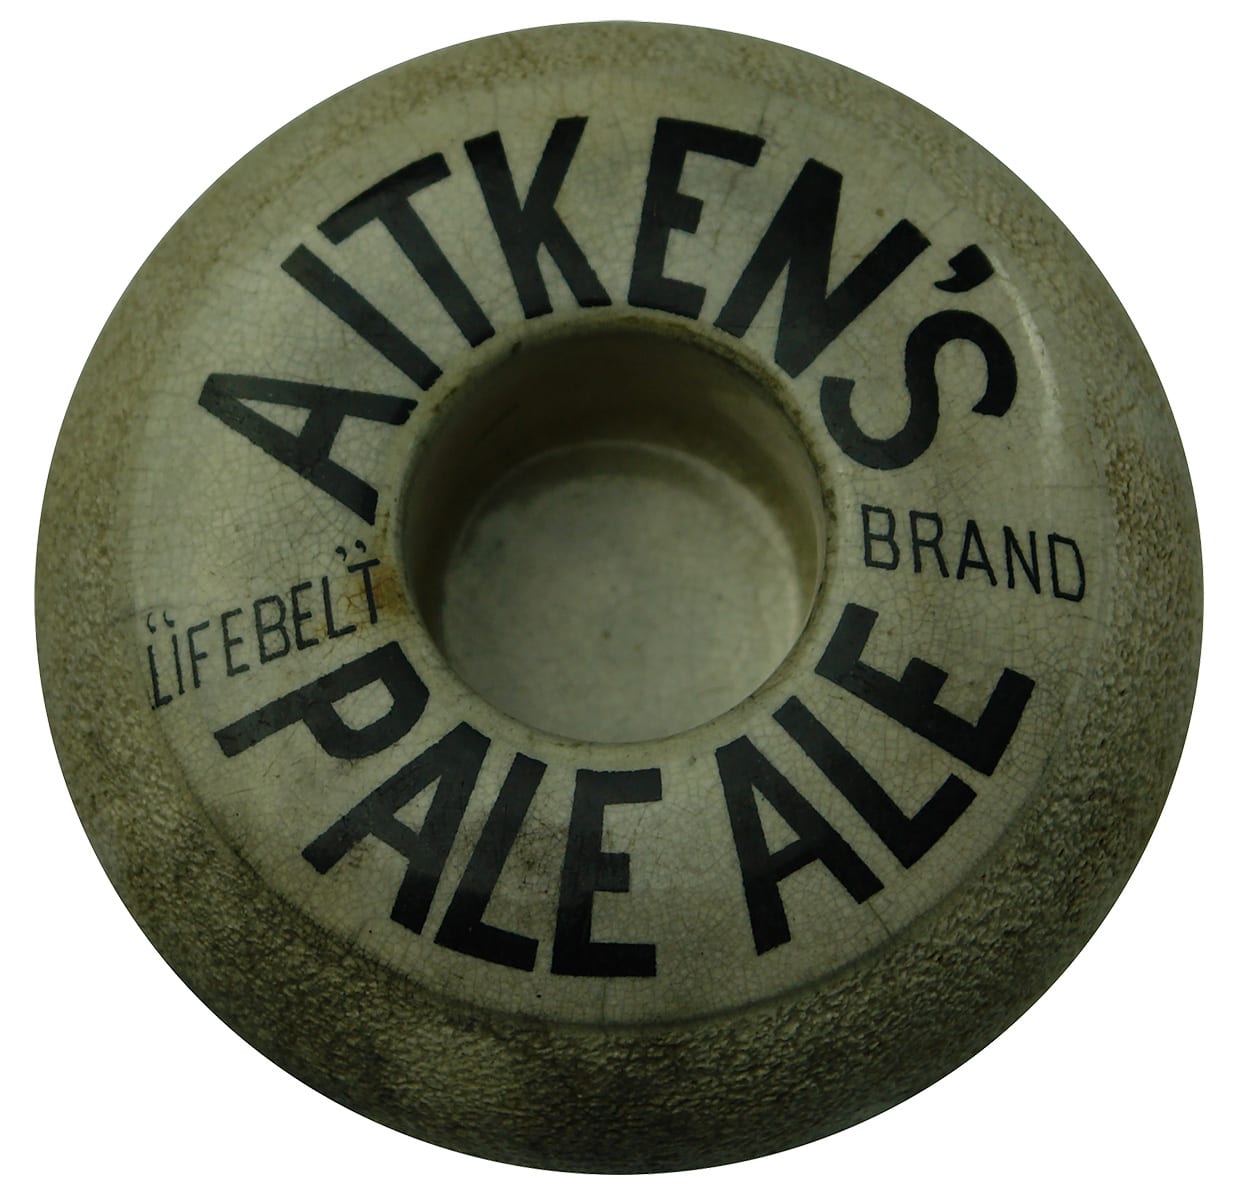 Aitken's Pale Ale Matchstriker